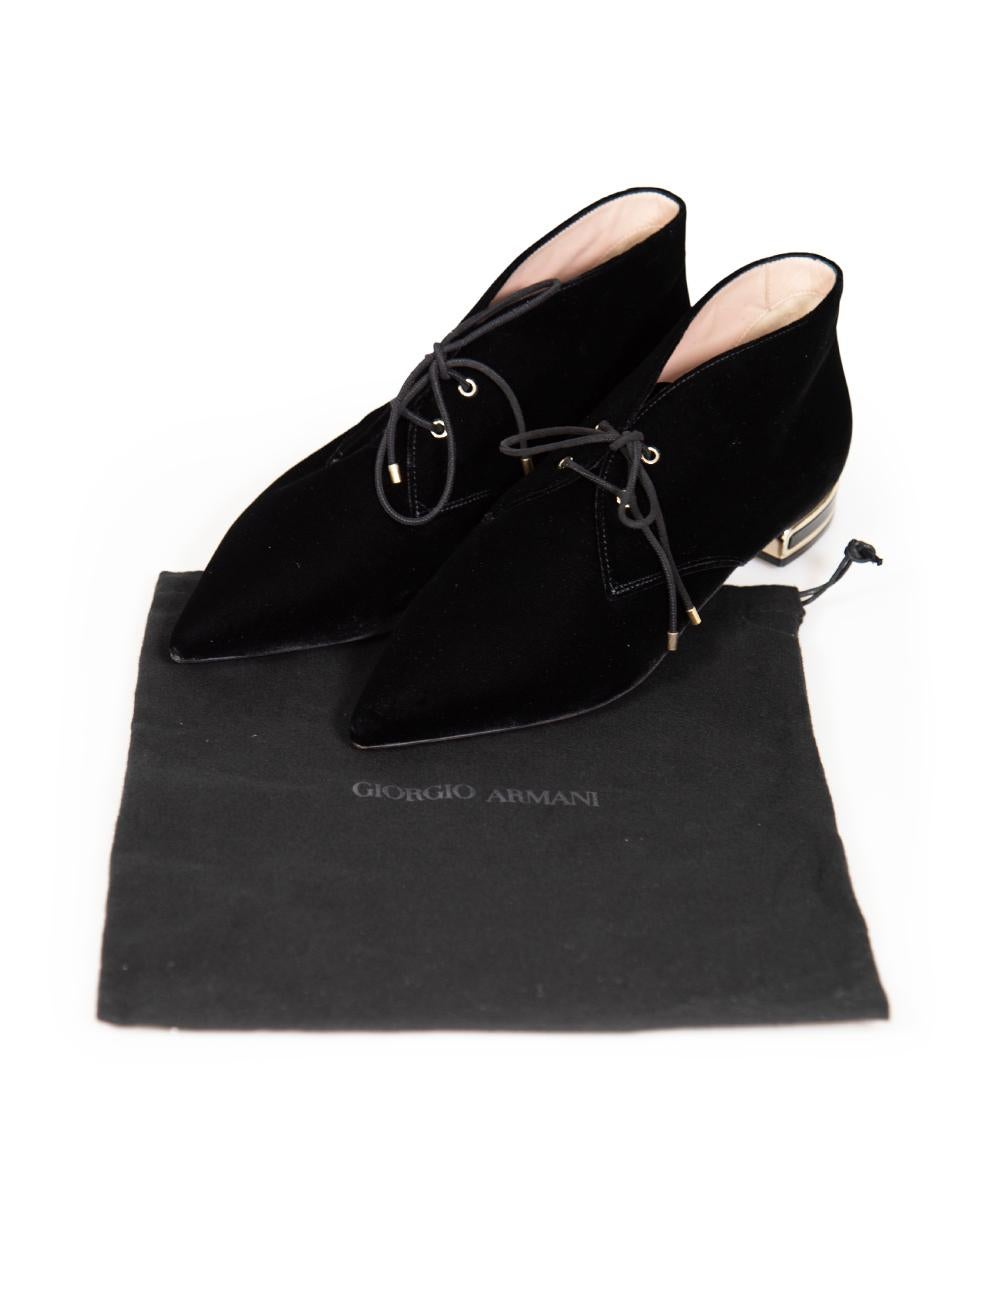 Giorgio Armani Black Velvet Pointed-Toe Oxfords Size IT 40 For Sale 2